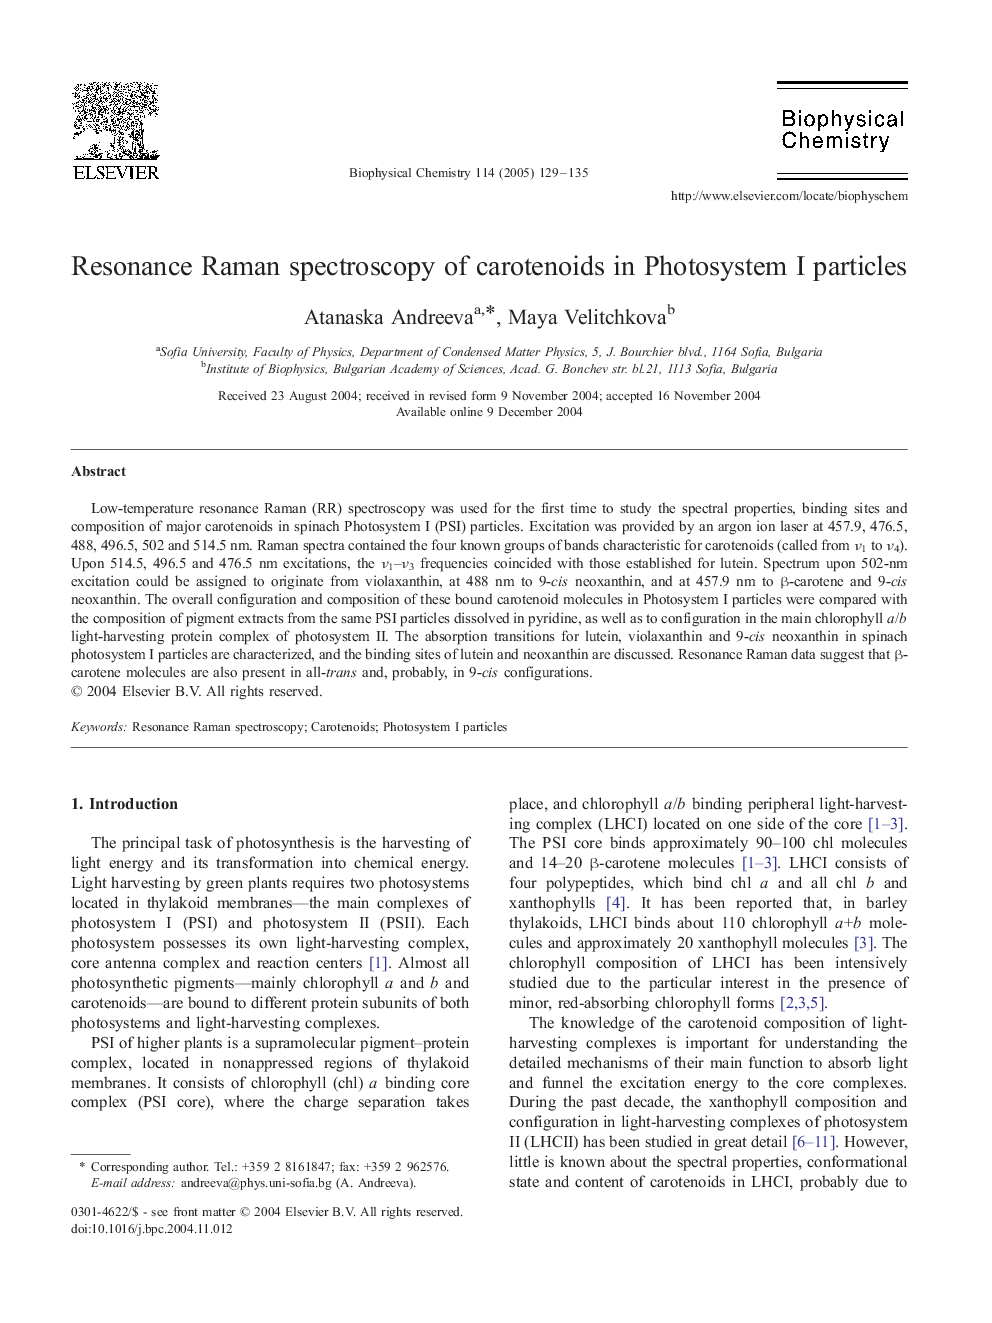 Resonance Raman spectroscopy of carotenoids in Photosystem I particles